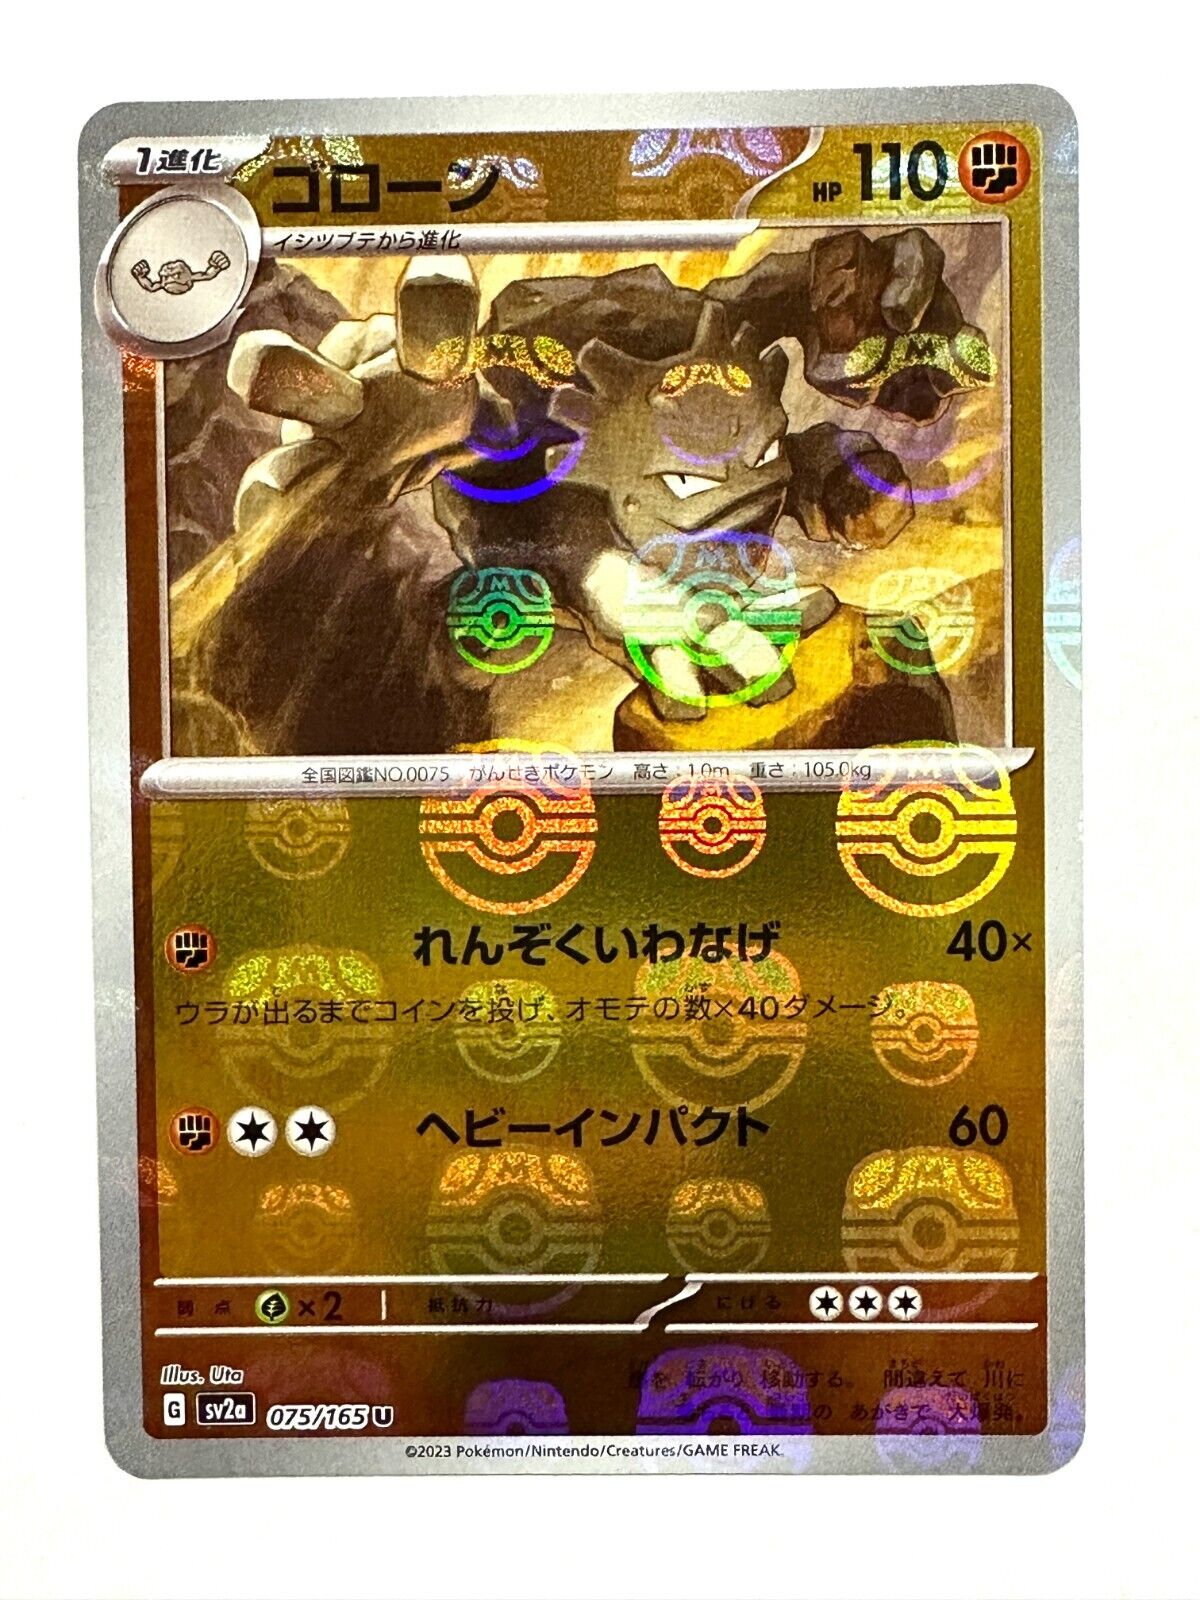 Pokemon Card Graveler (MASTER BALL FOIL) U 075/165 SV2a JAPAN EDITION